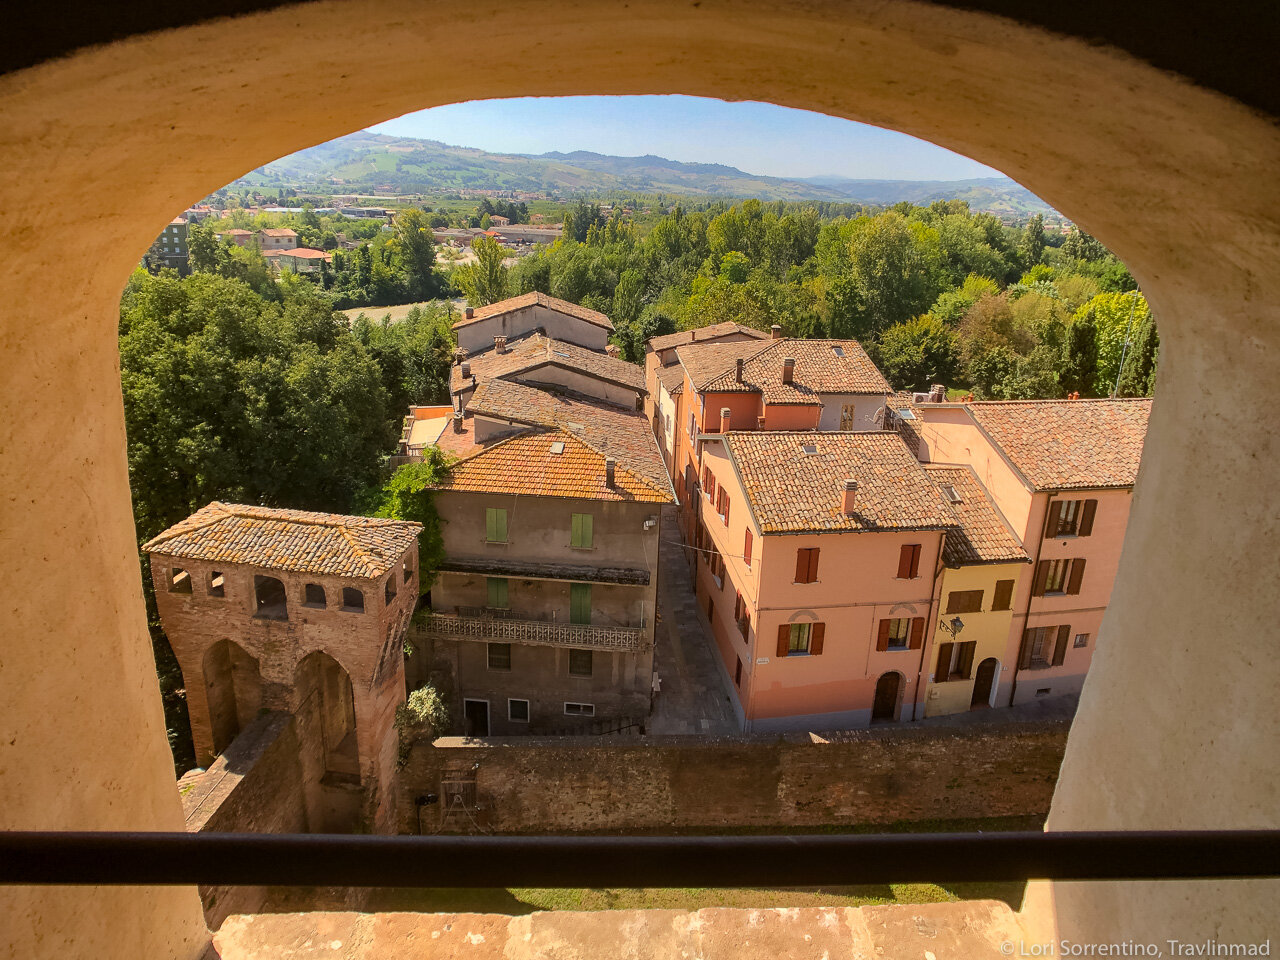 Rocca di Vignola (Fortress of Vignola)